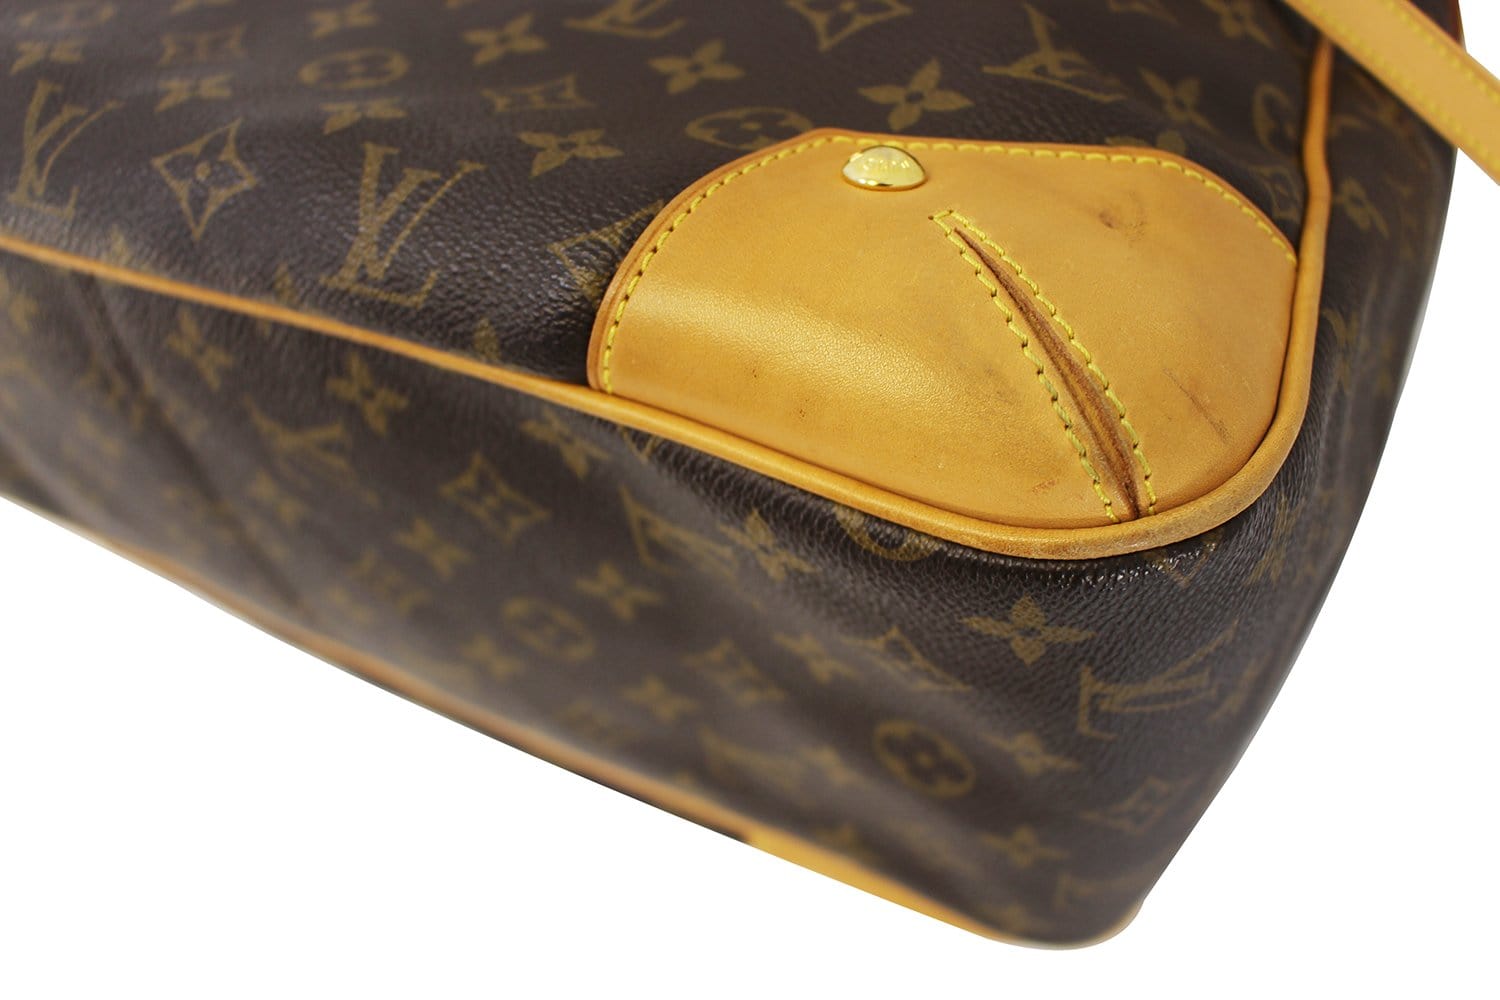 Louis Vuitton Estrela Gm Monogram Canvas Shoulder Bag Brown